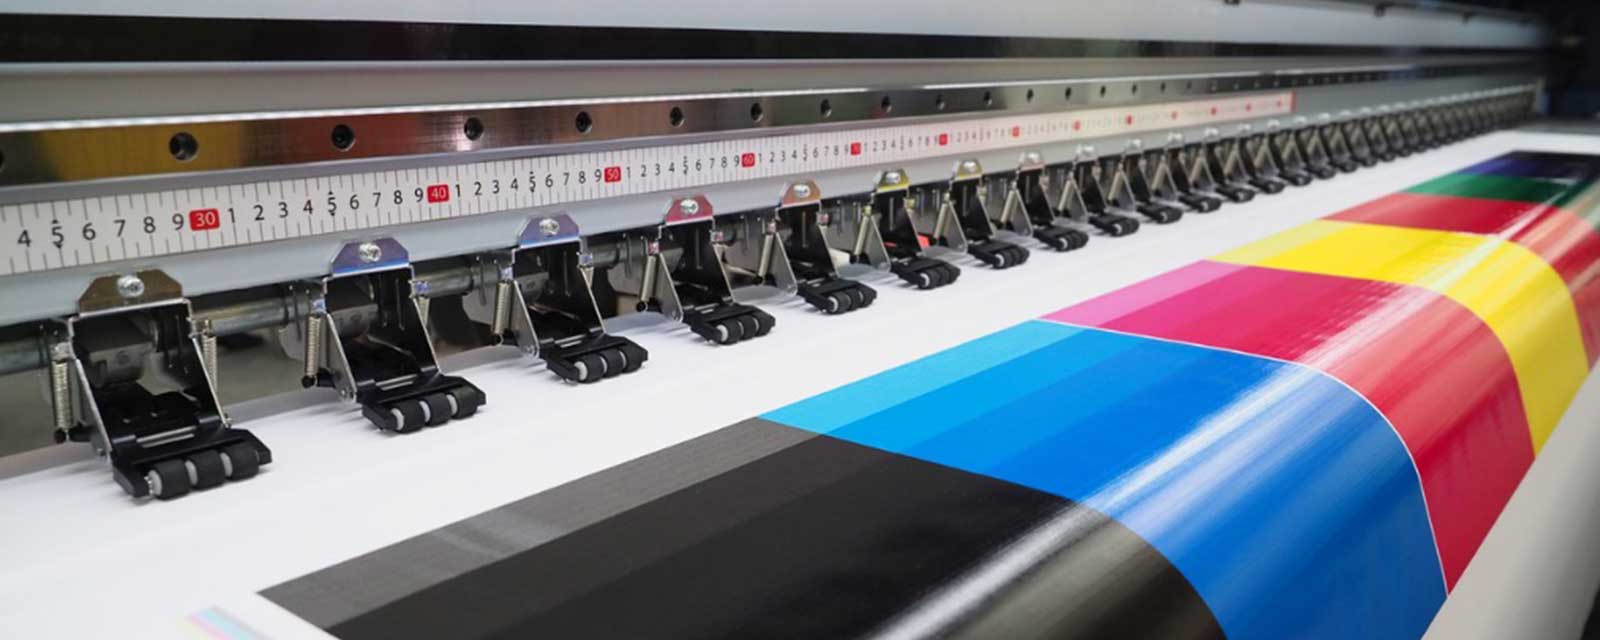 Large Format Printer Repairs in Sydney